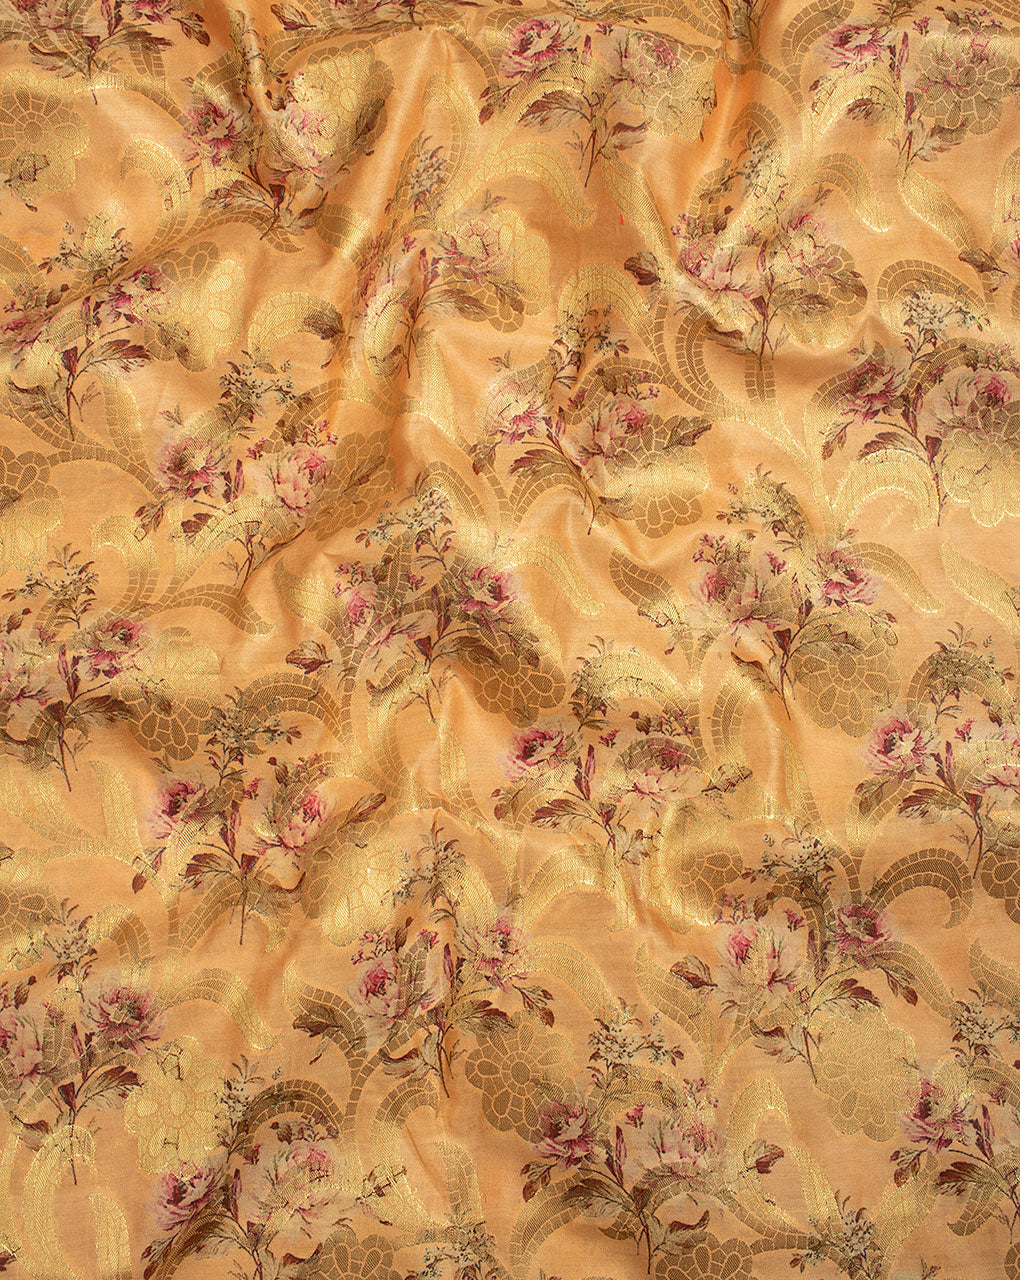 Orange Gold Digital Print Zari Jacqurad Chanderi Fabric - Fabriclore.com